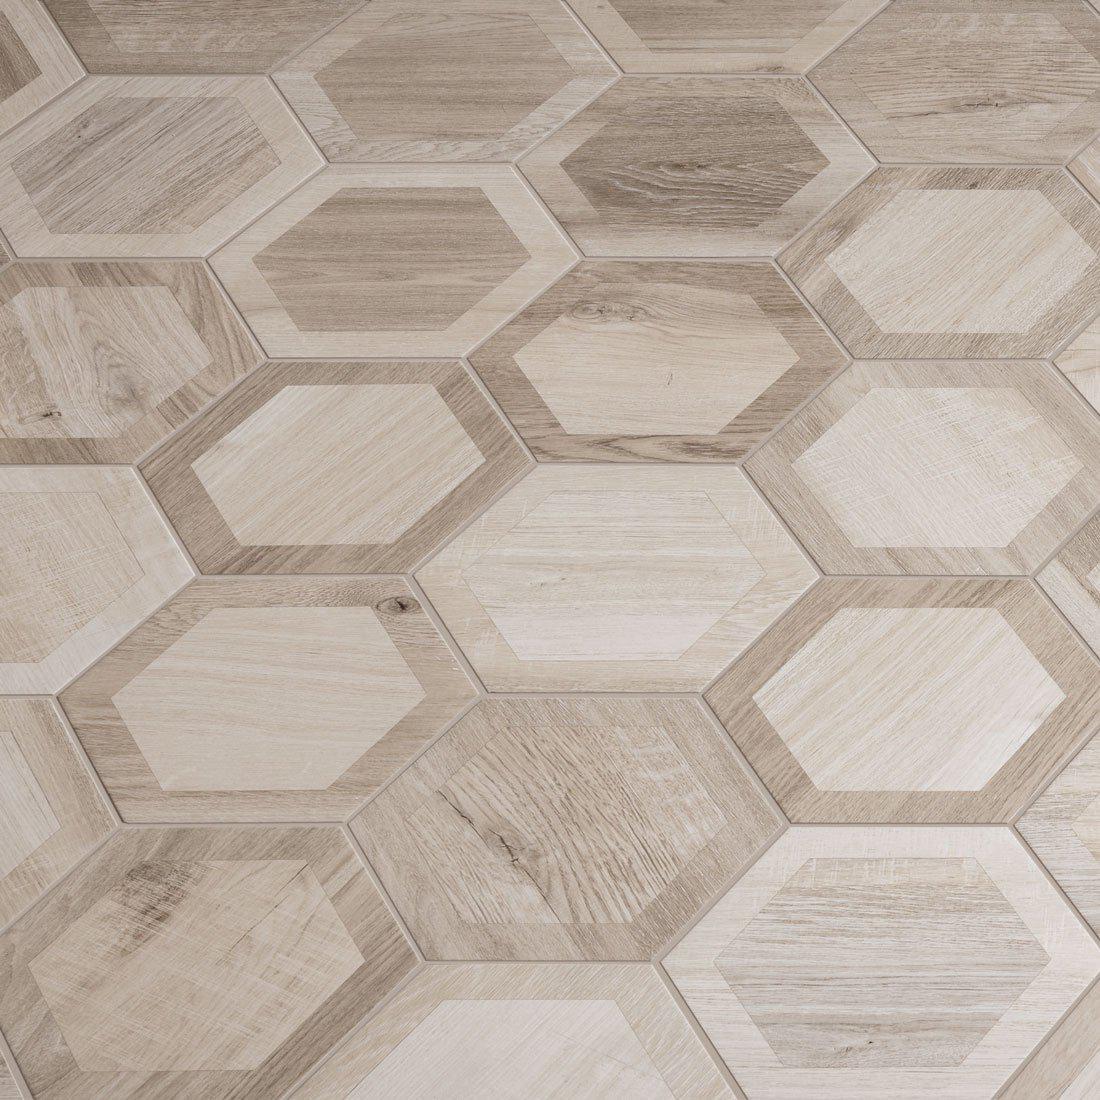 Wood Look Hexagon Tile Flooring